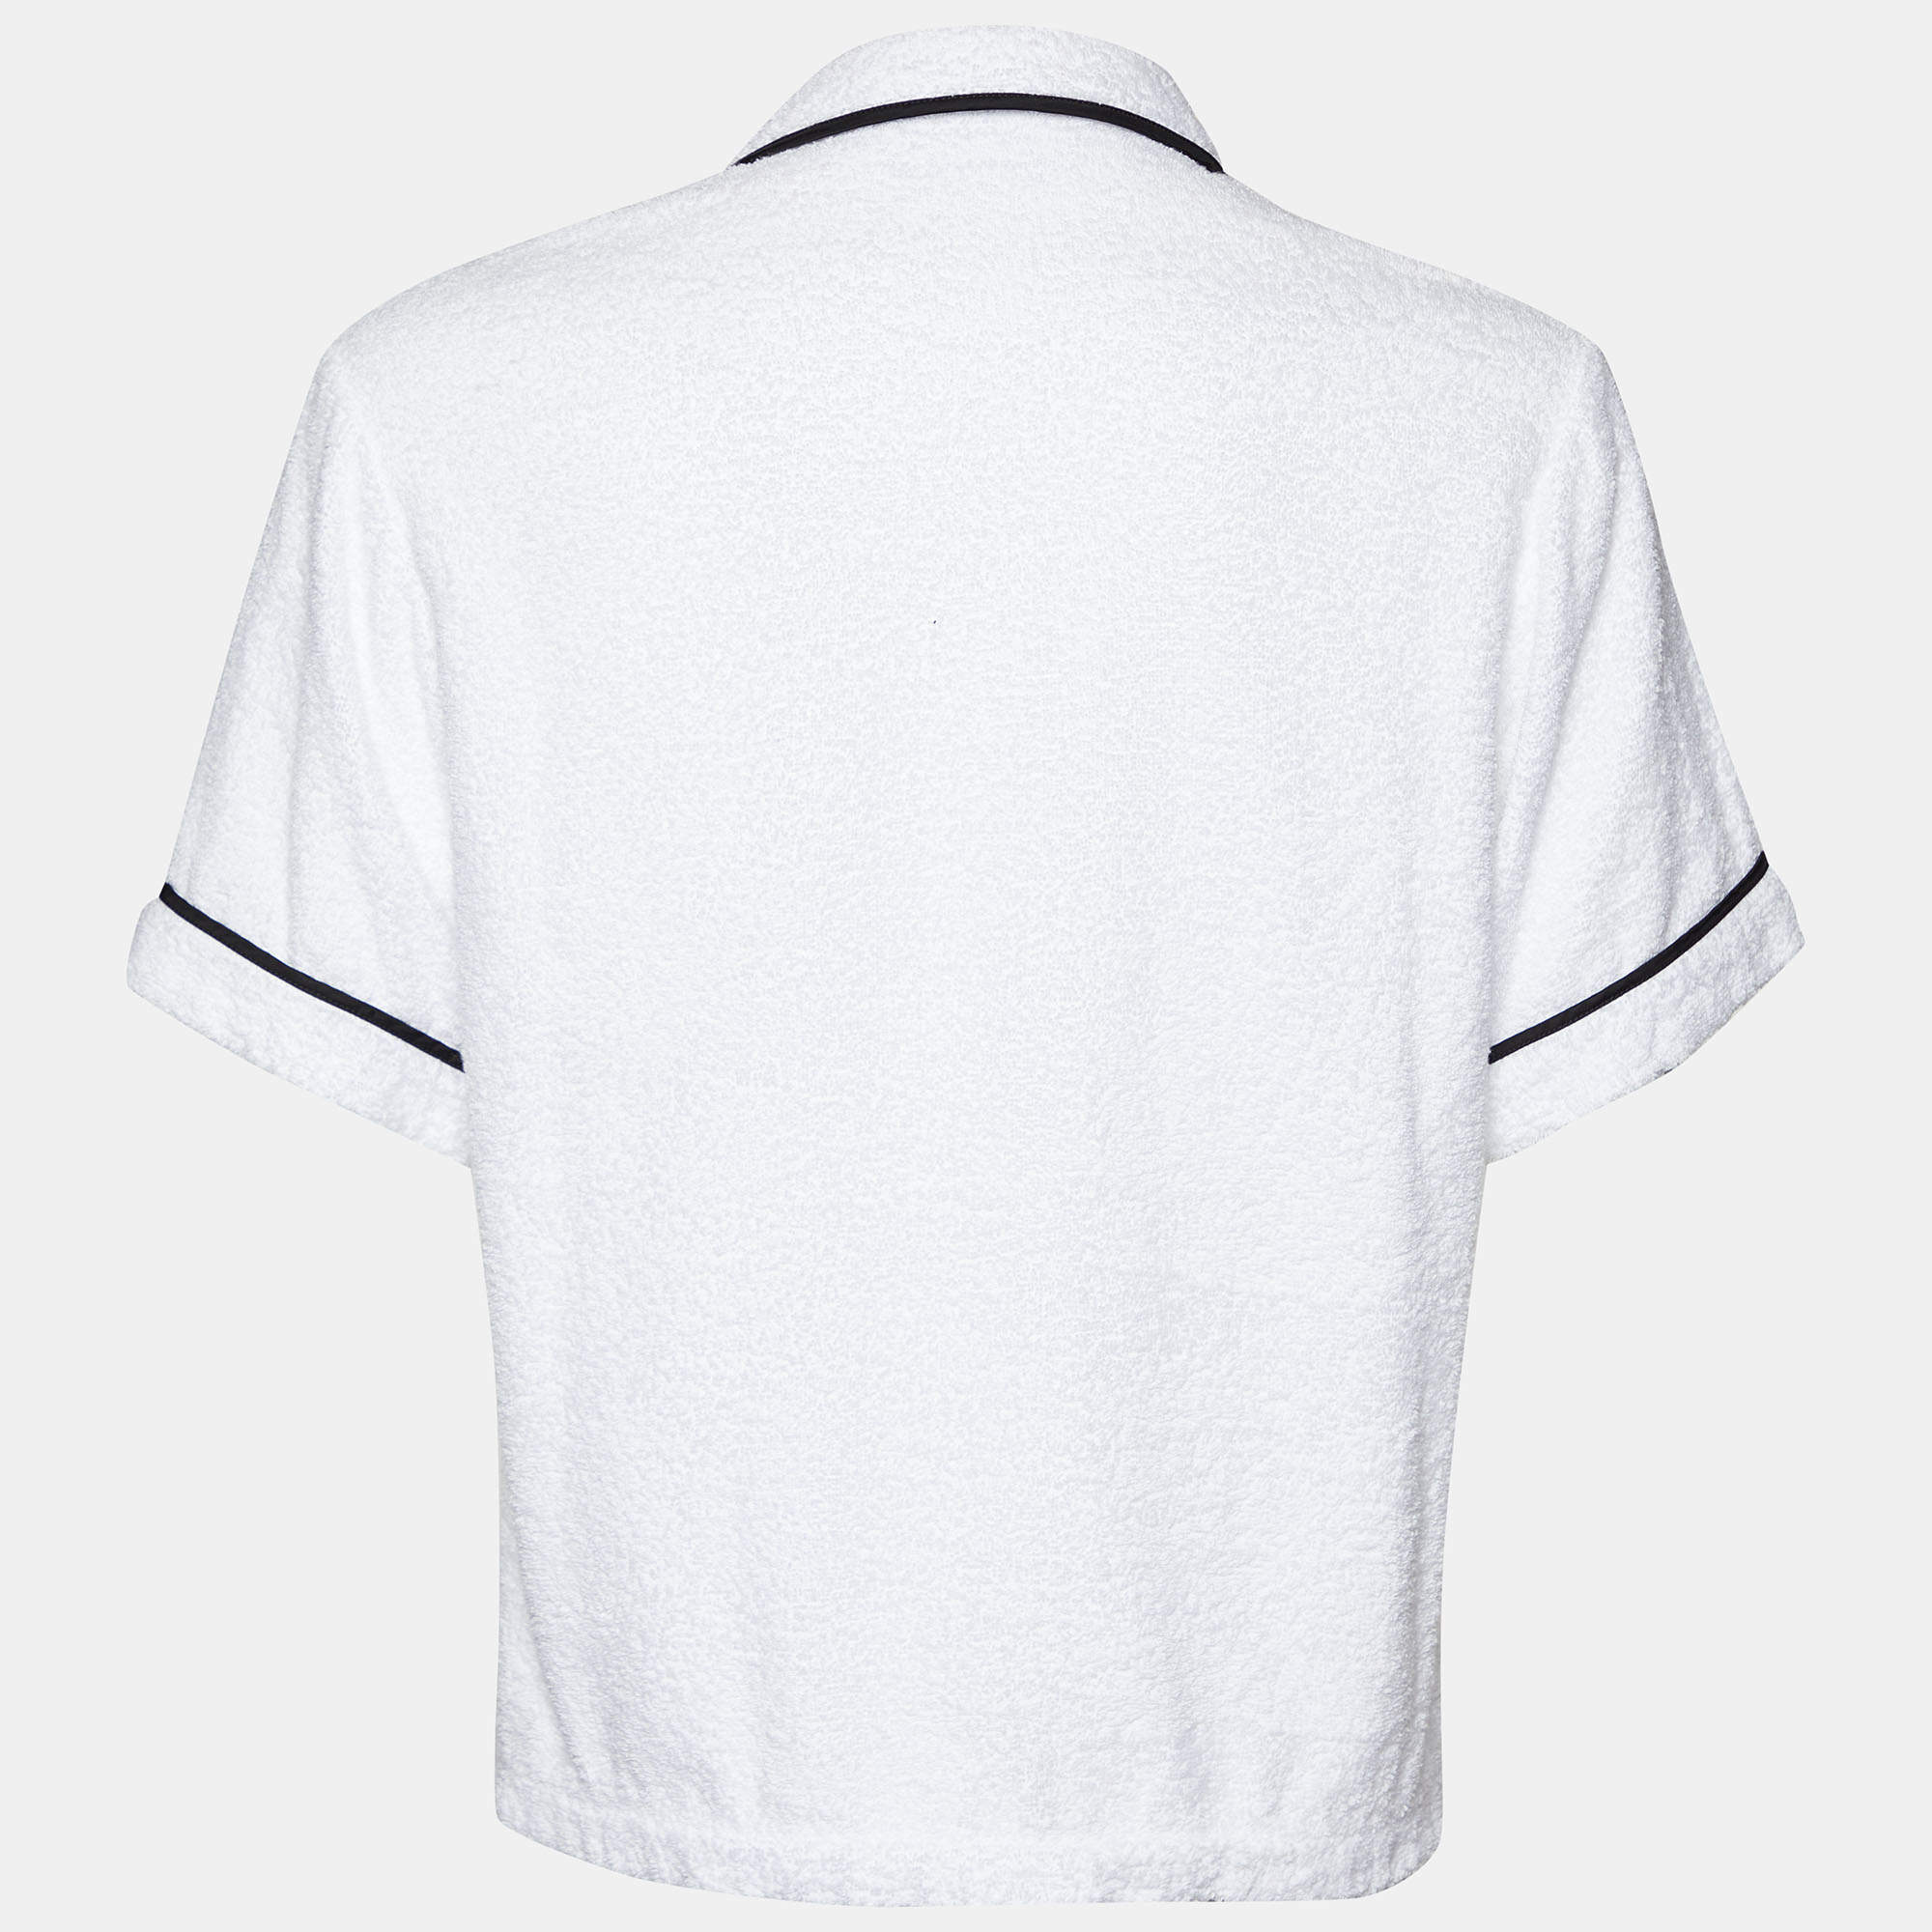 Prada White Cotton Terry Button Front Bowling Shirt M Prada